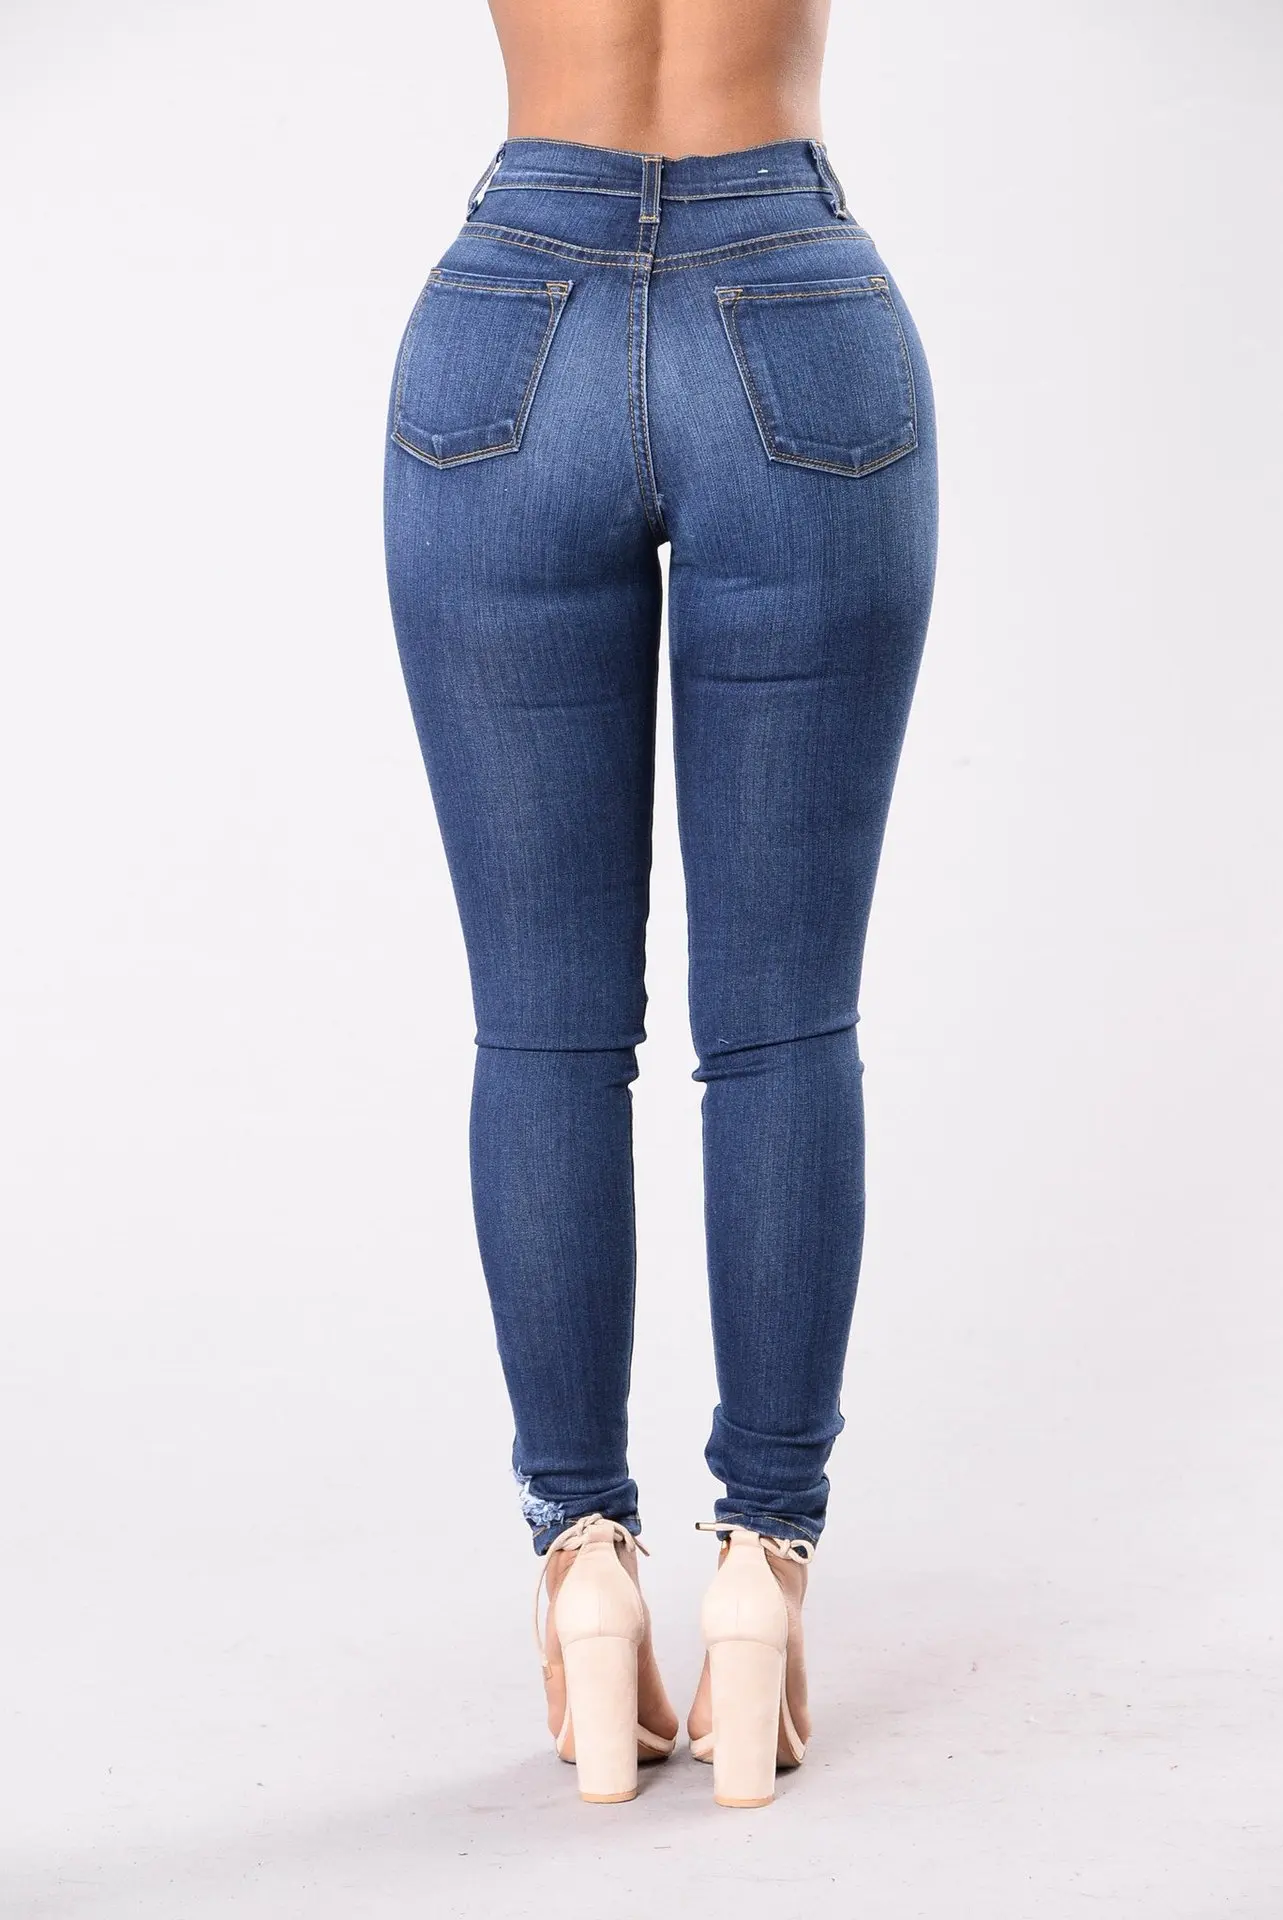 2022 Factory Pantalon Jean Femm Wholesale Skinny Femme Jeans Pant Plus ...